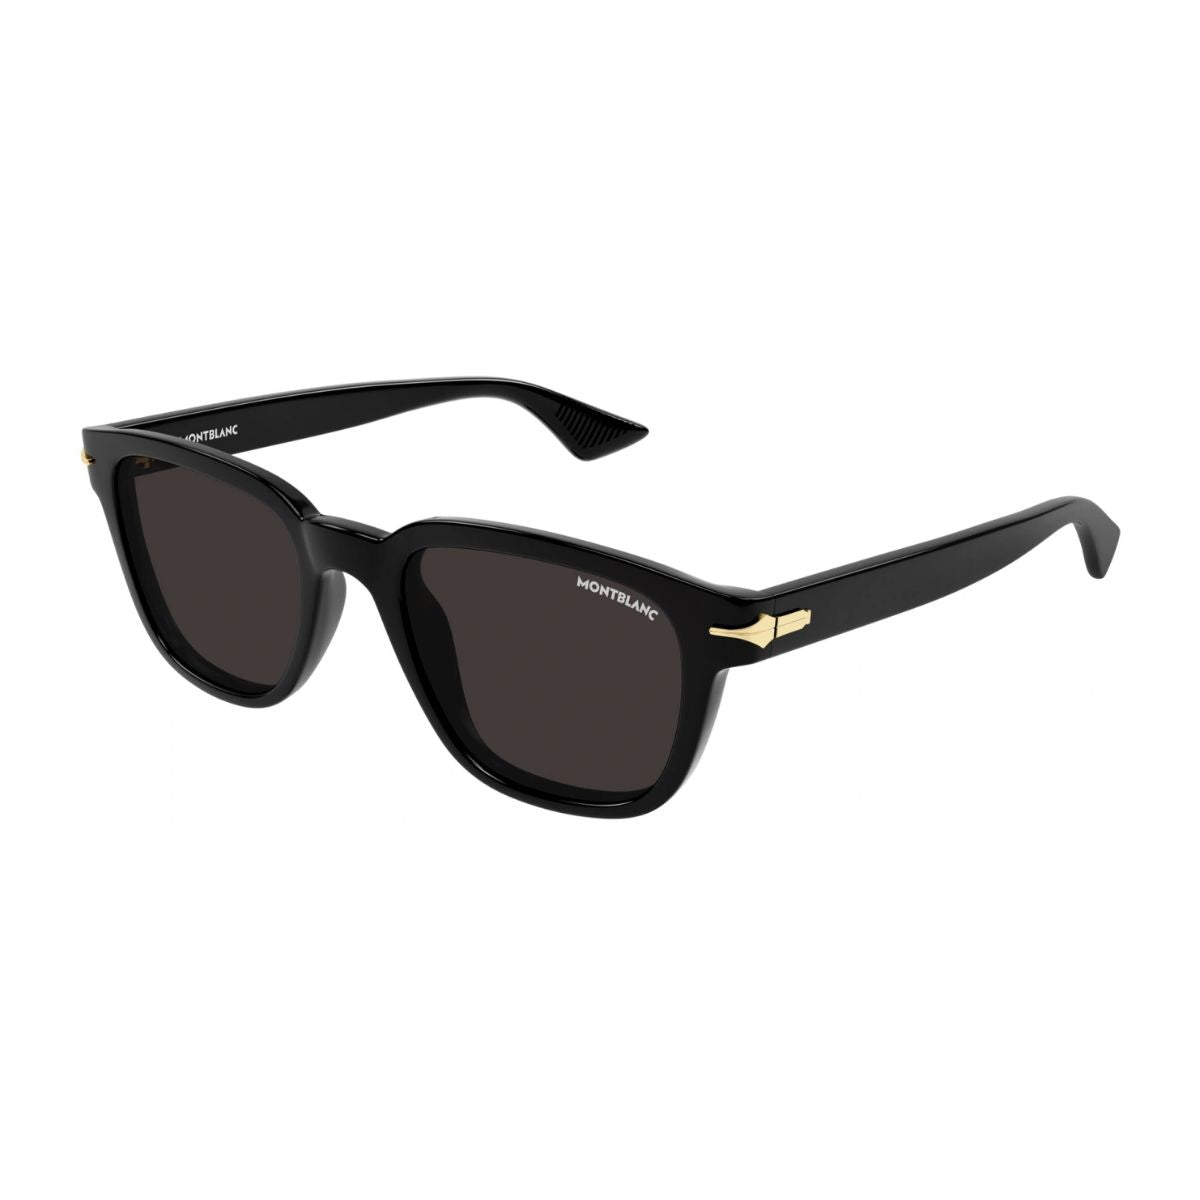 "Shop Latest Mont Blanc Black Square Sunglasses For Mens At Optorium"